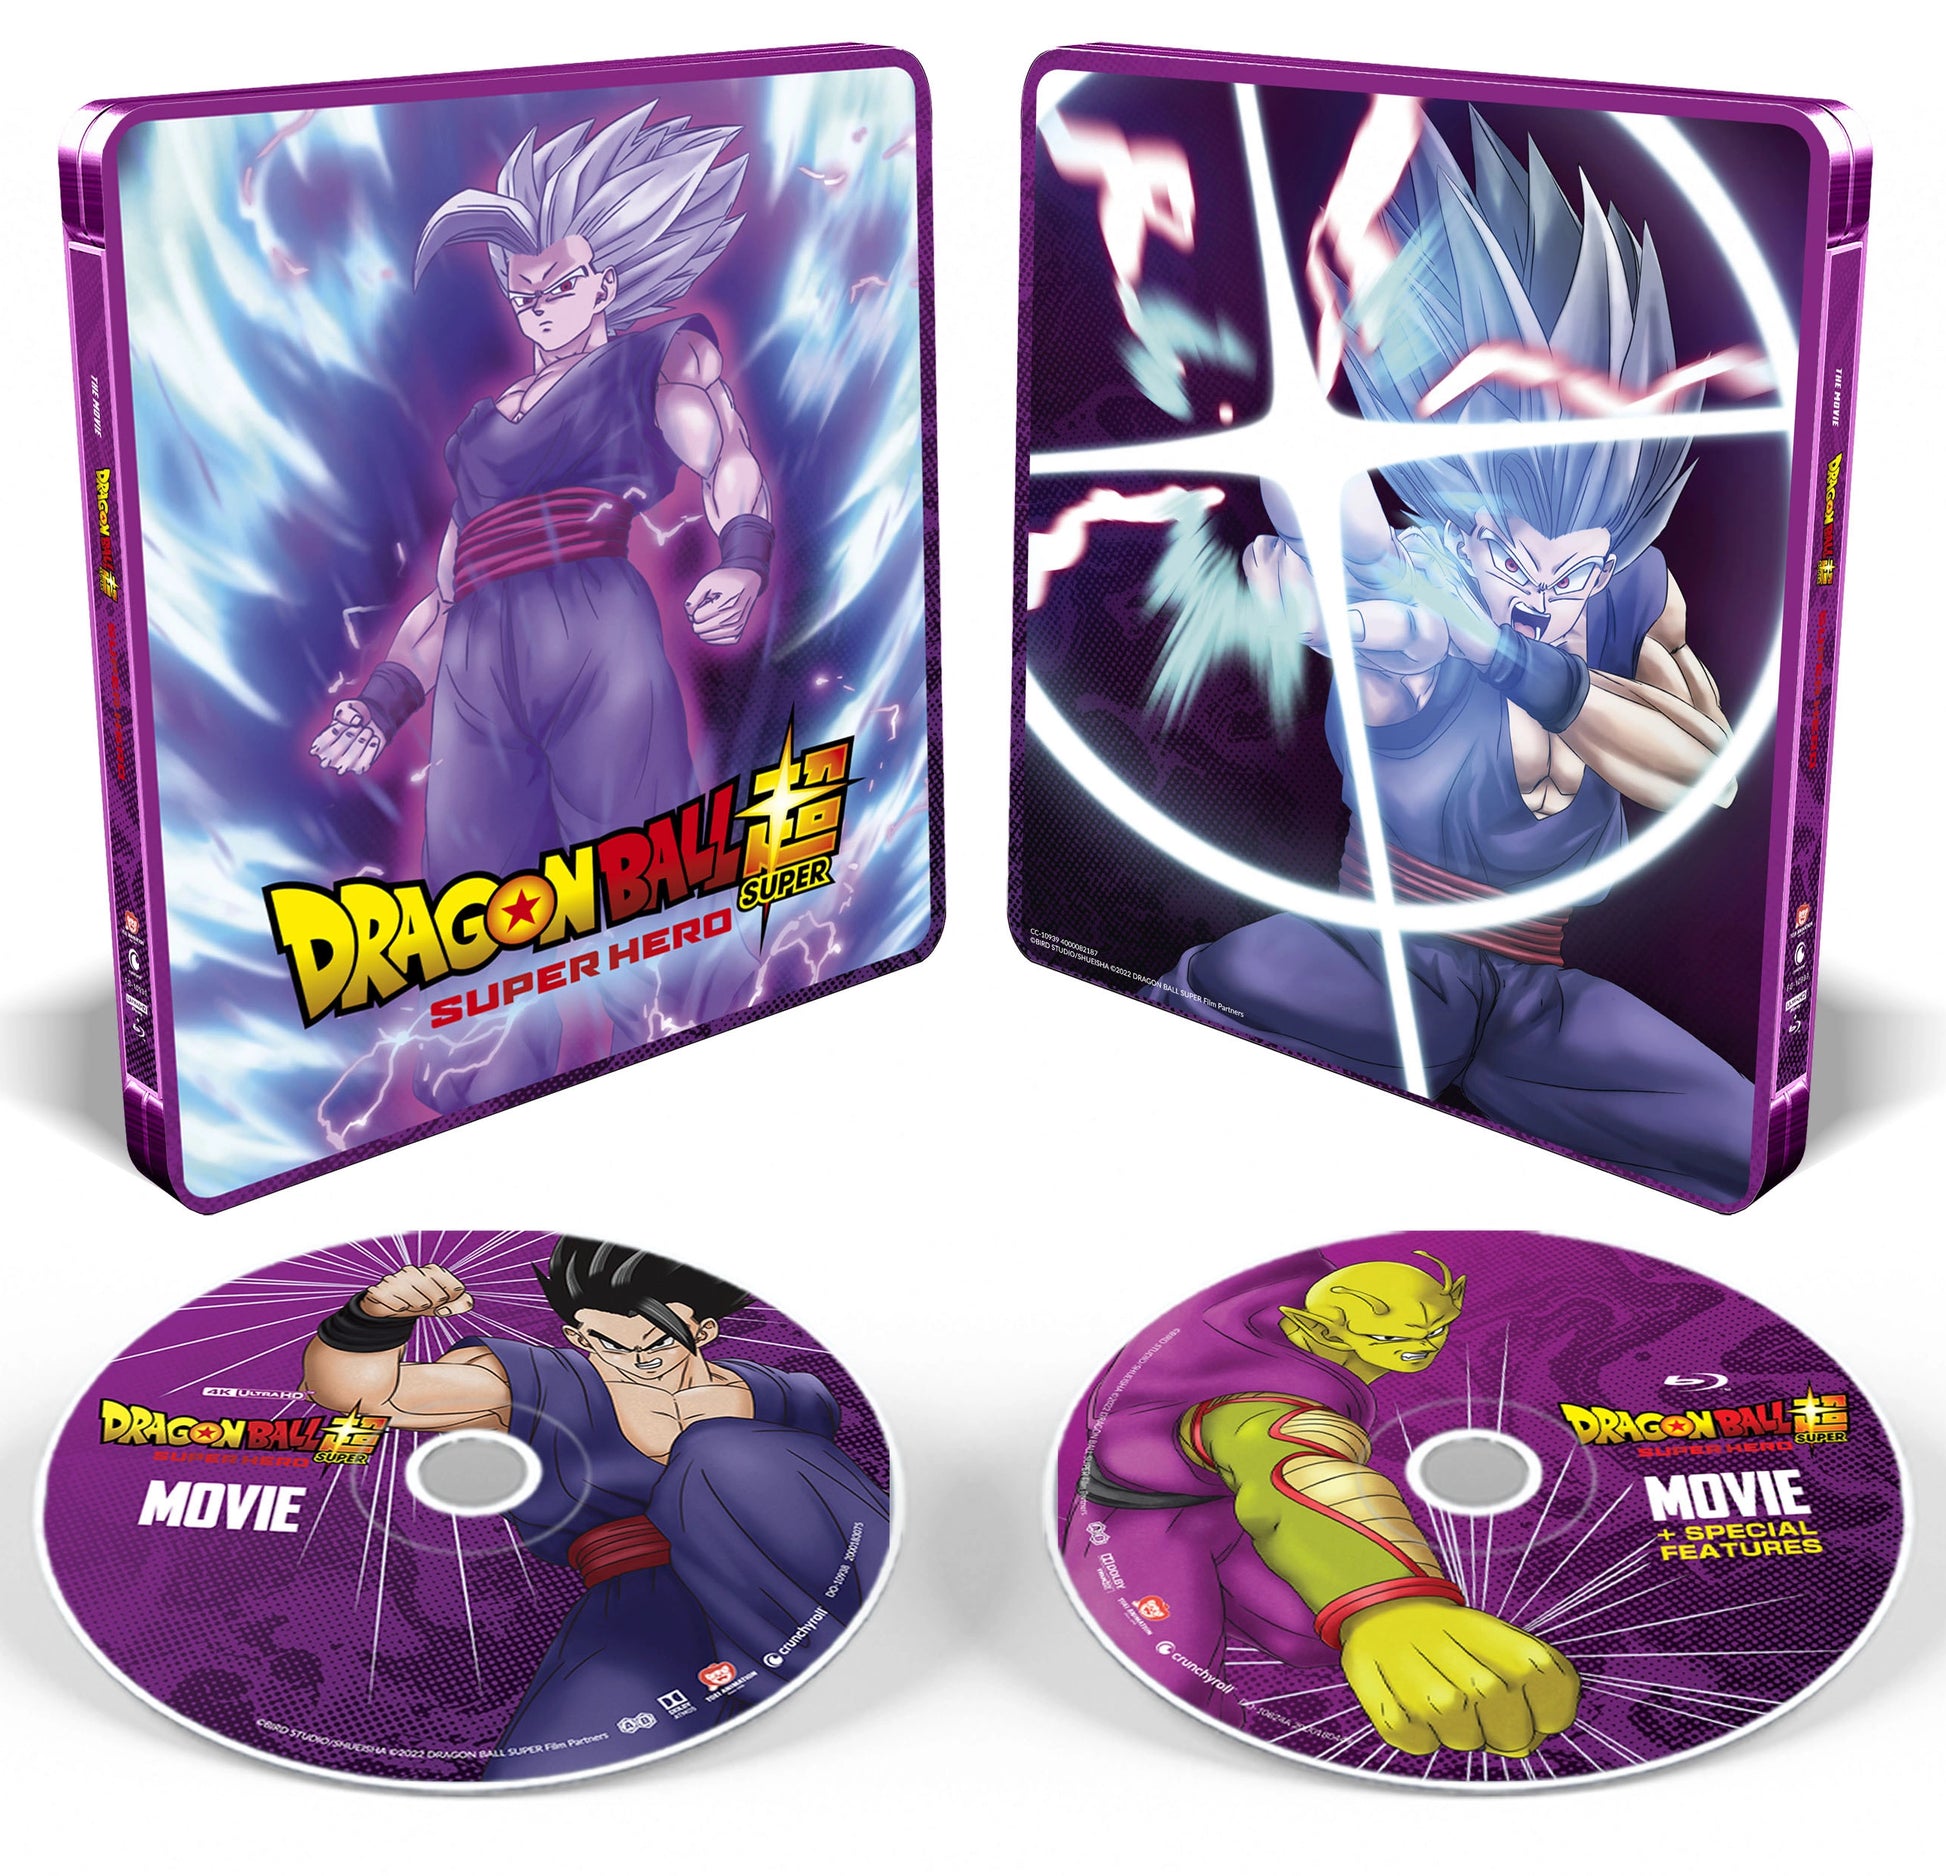  Dragon Ball Super: Super Hero - 4K Ultra HD + Blu-ray